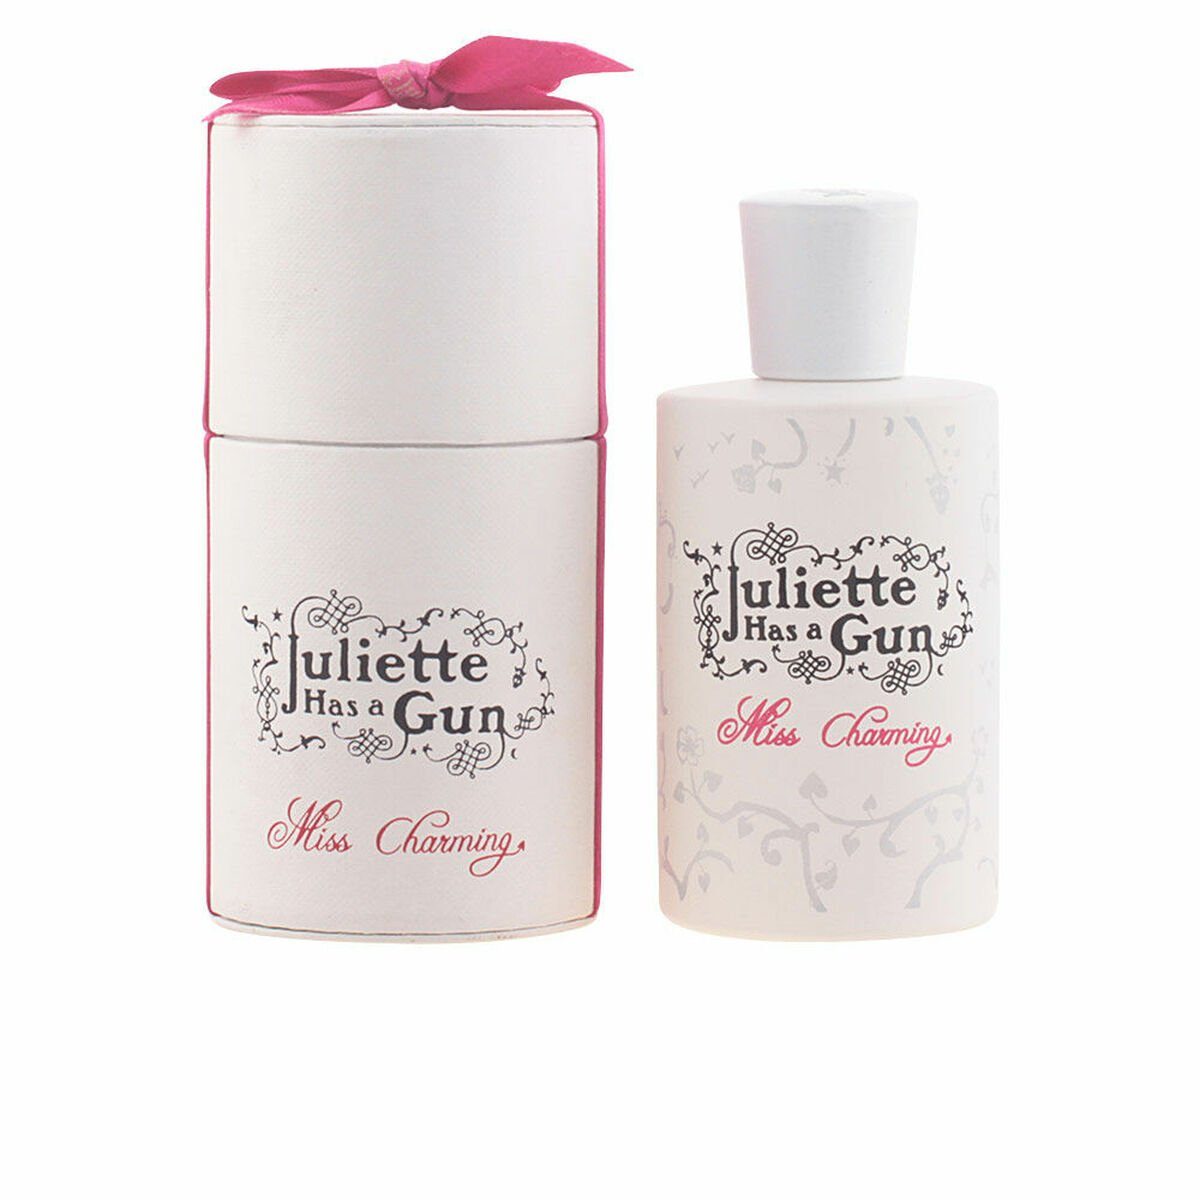 Juliette has a Gun Toilette A de Eau Eau Gun Charming de Damenparfüm ml 100 Miss Juliette Has Parfum